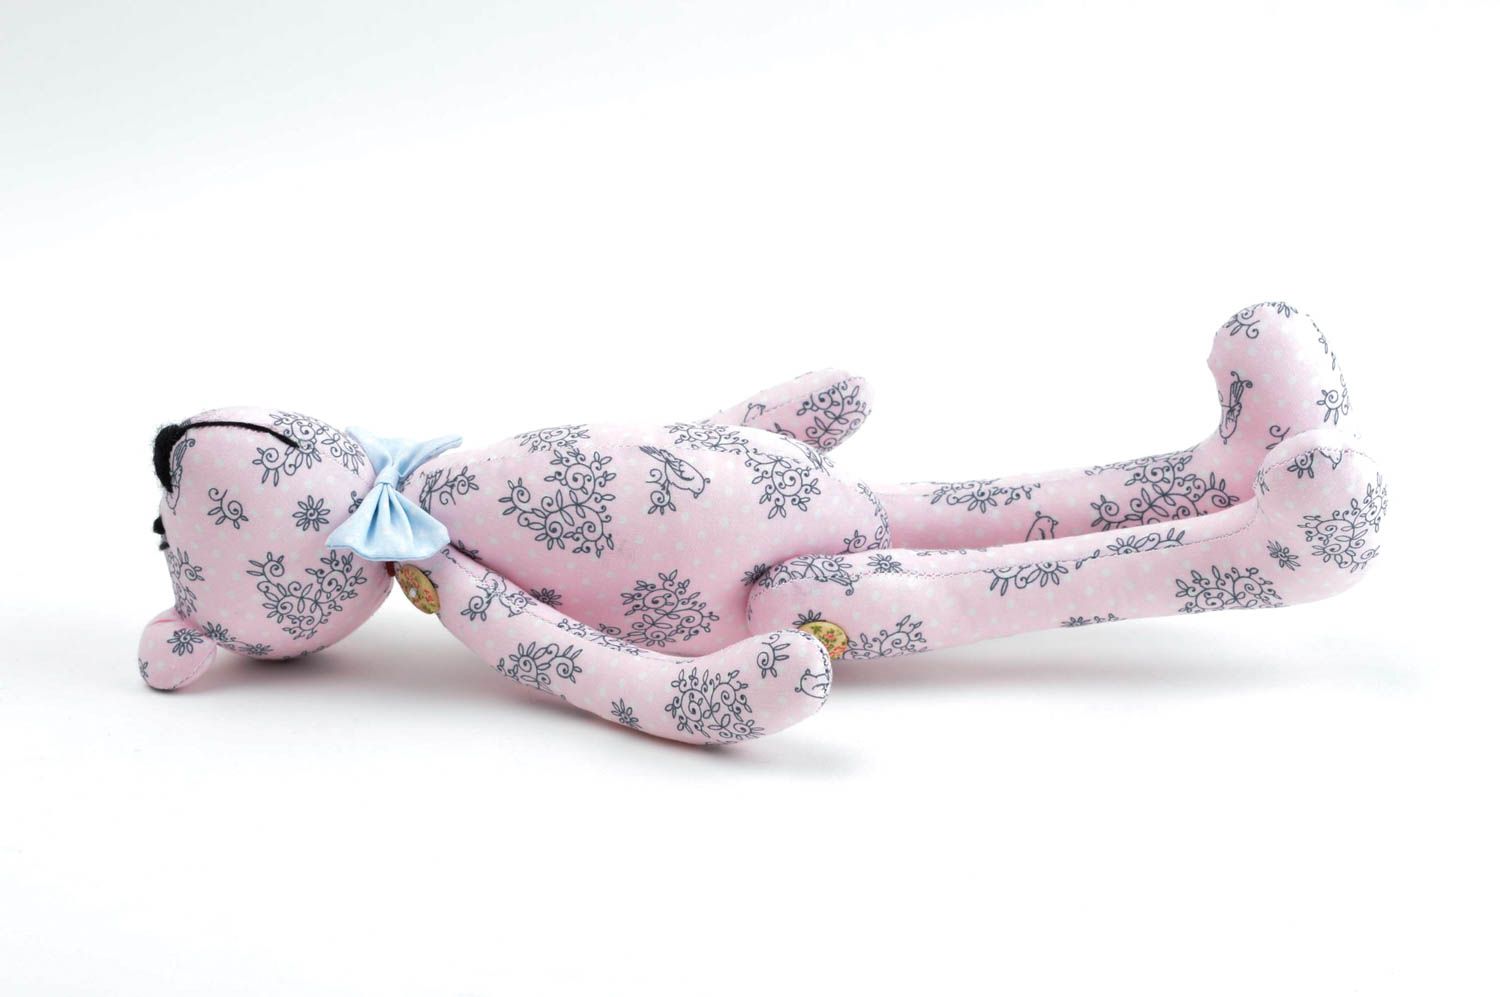 Unusual handmade fabric soft toy stuffed bear toy living room designs gift ideas photo 3